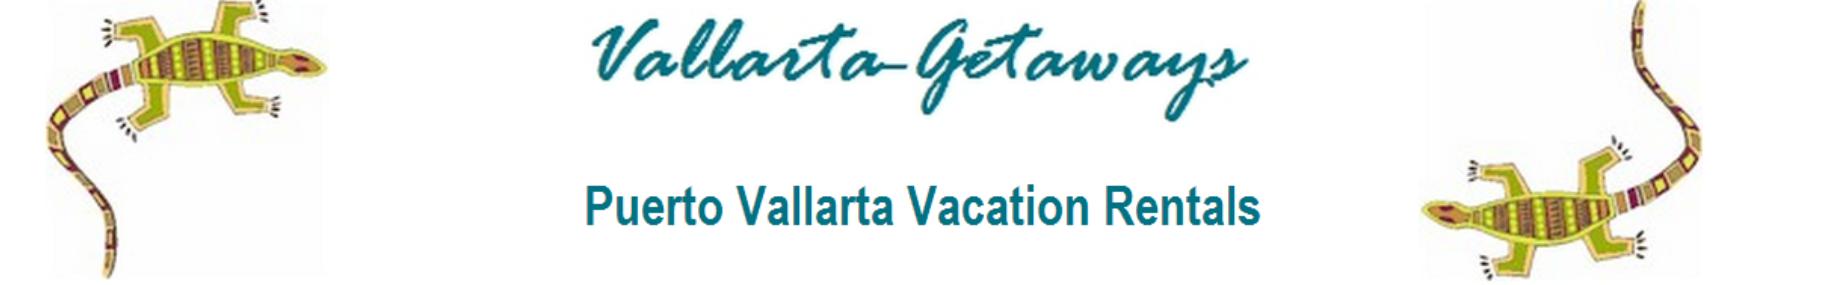 Vallarta Getaways banner